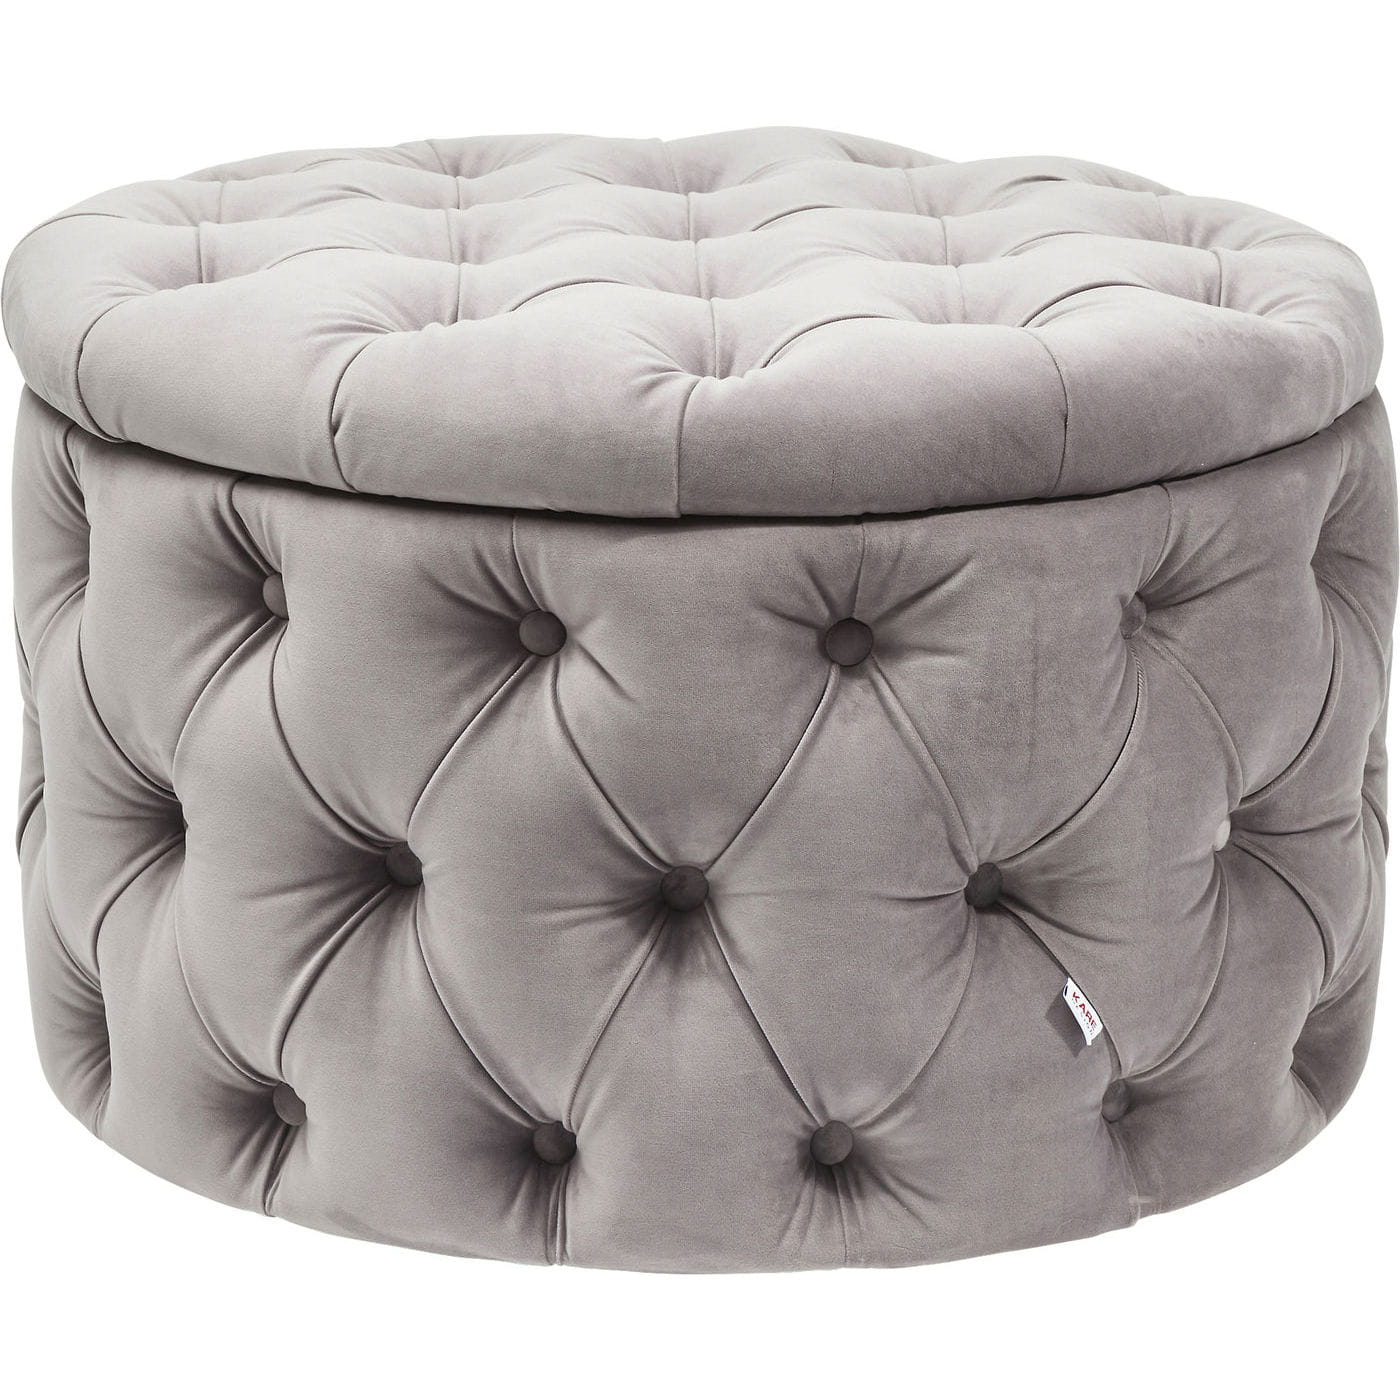 KARE Design Sedile Desire tondo grigio argento, Sgabelli da seduta, Sgabelli, Mobili